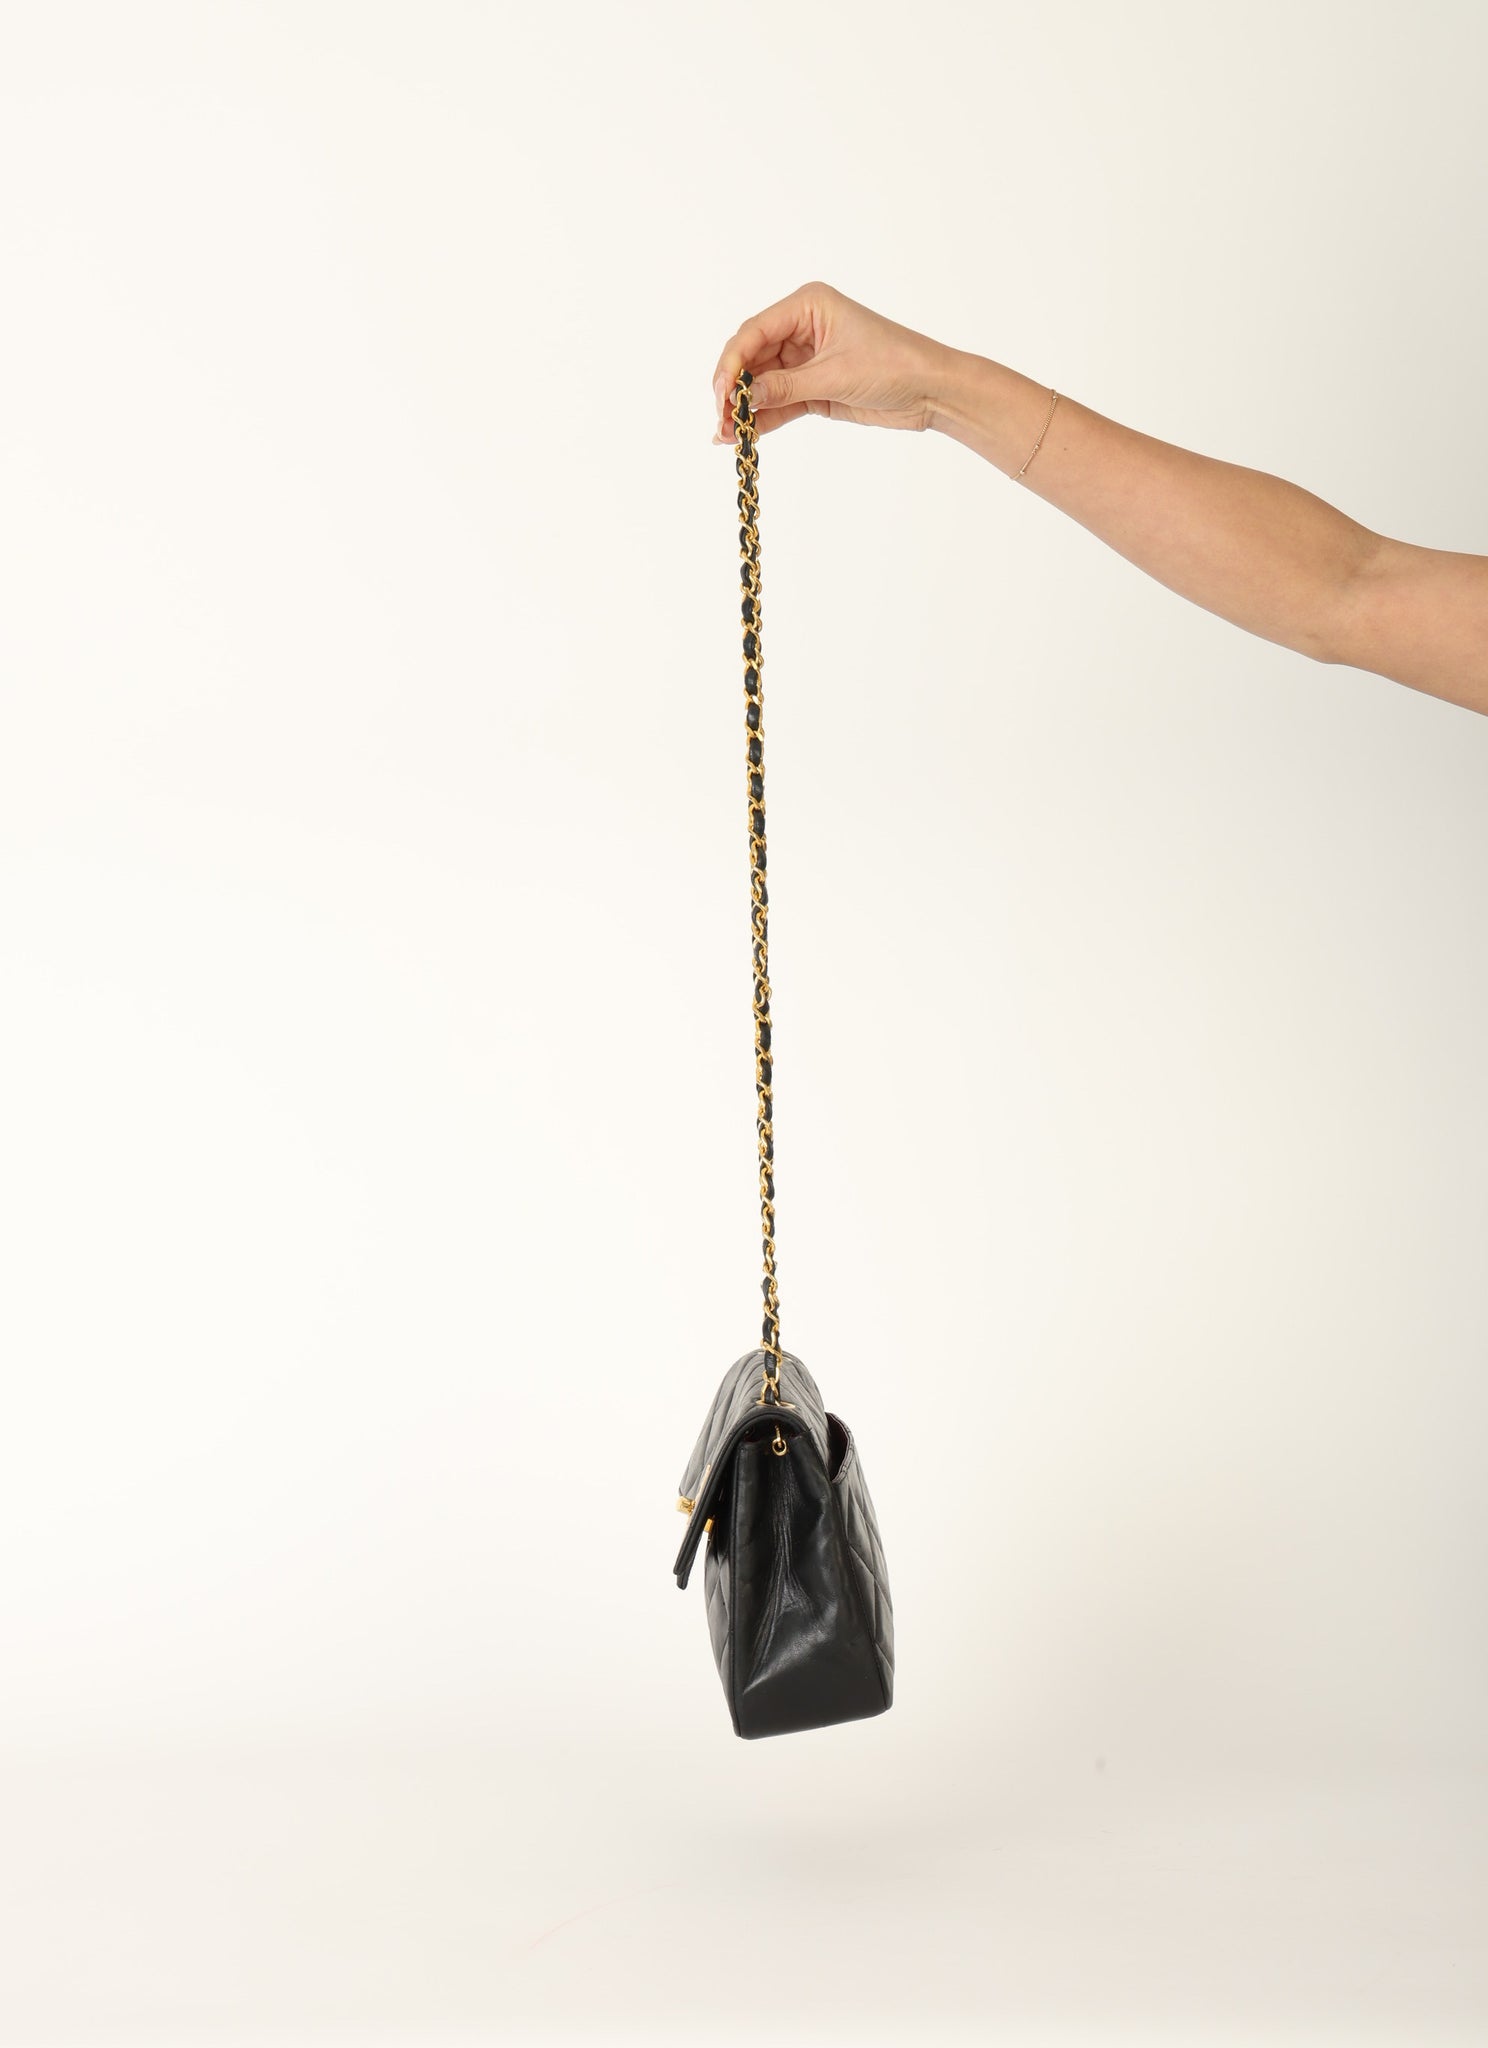 Ultra-Rare Chanel Lambskin Beak Tip Turnlock Flap Bag